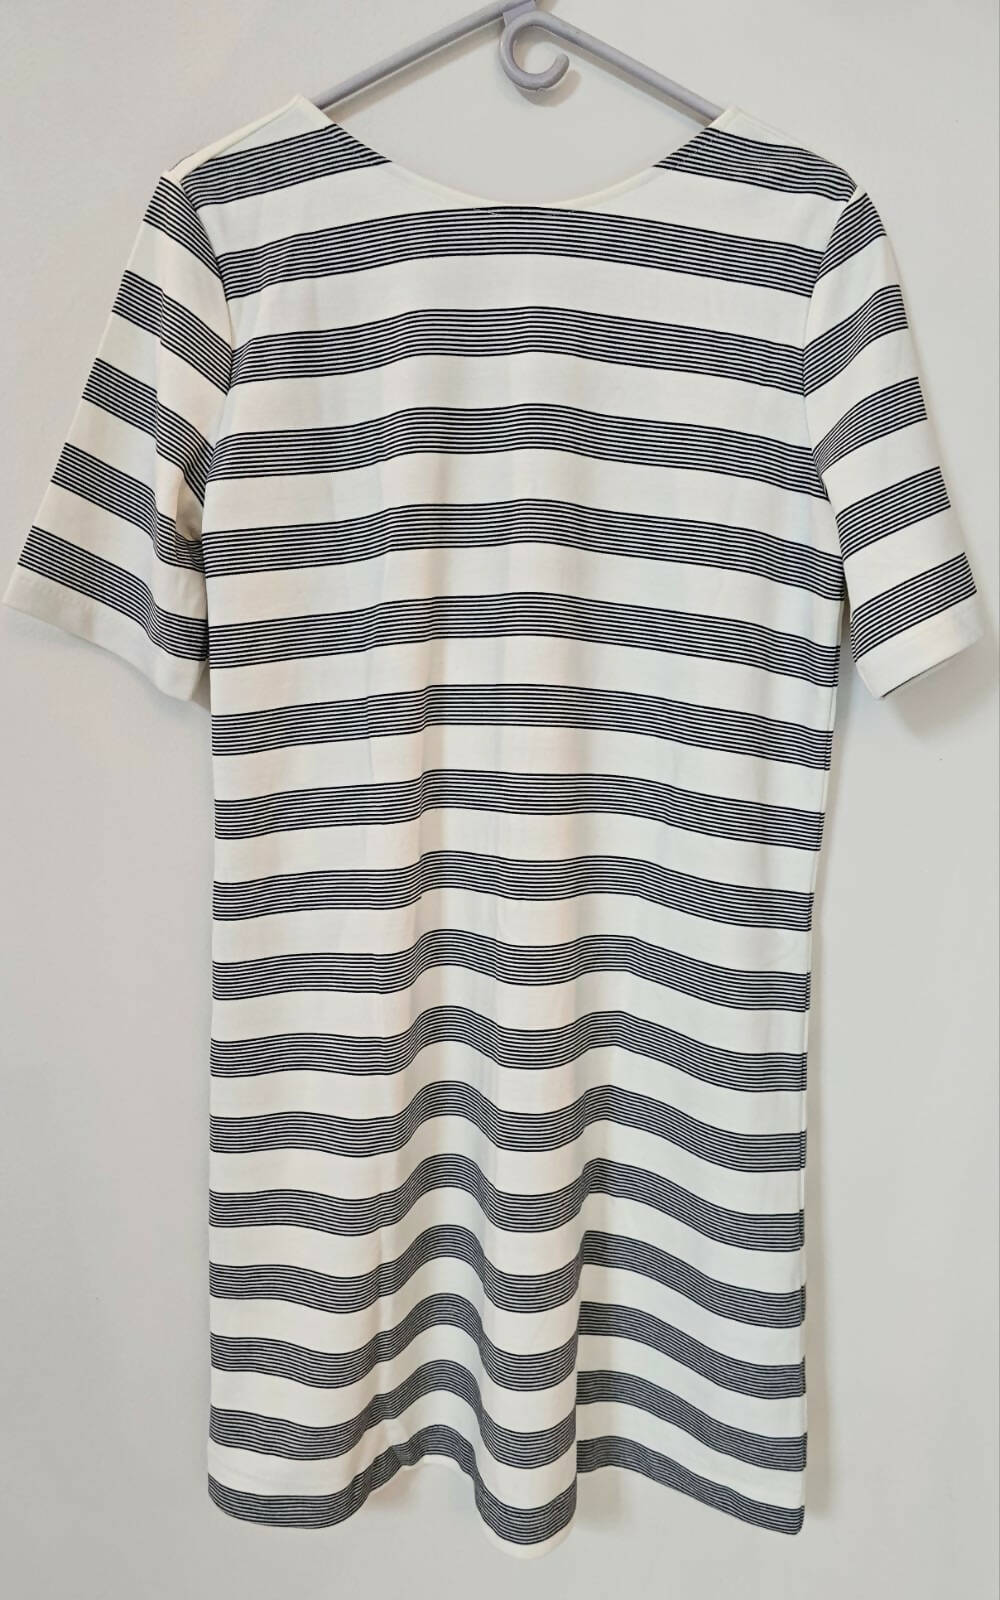 Black & White Stripped Mini Dress (Size: L )| Women Tops & Shirts | New